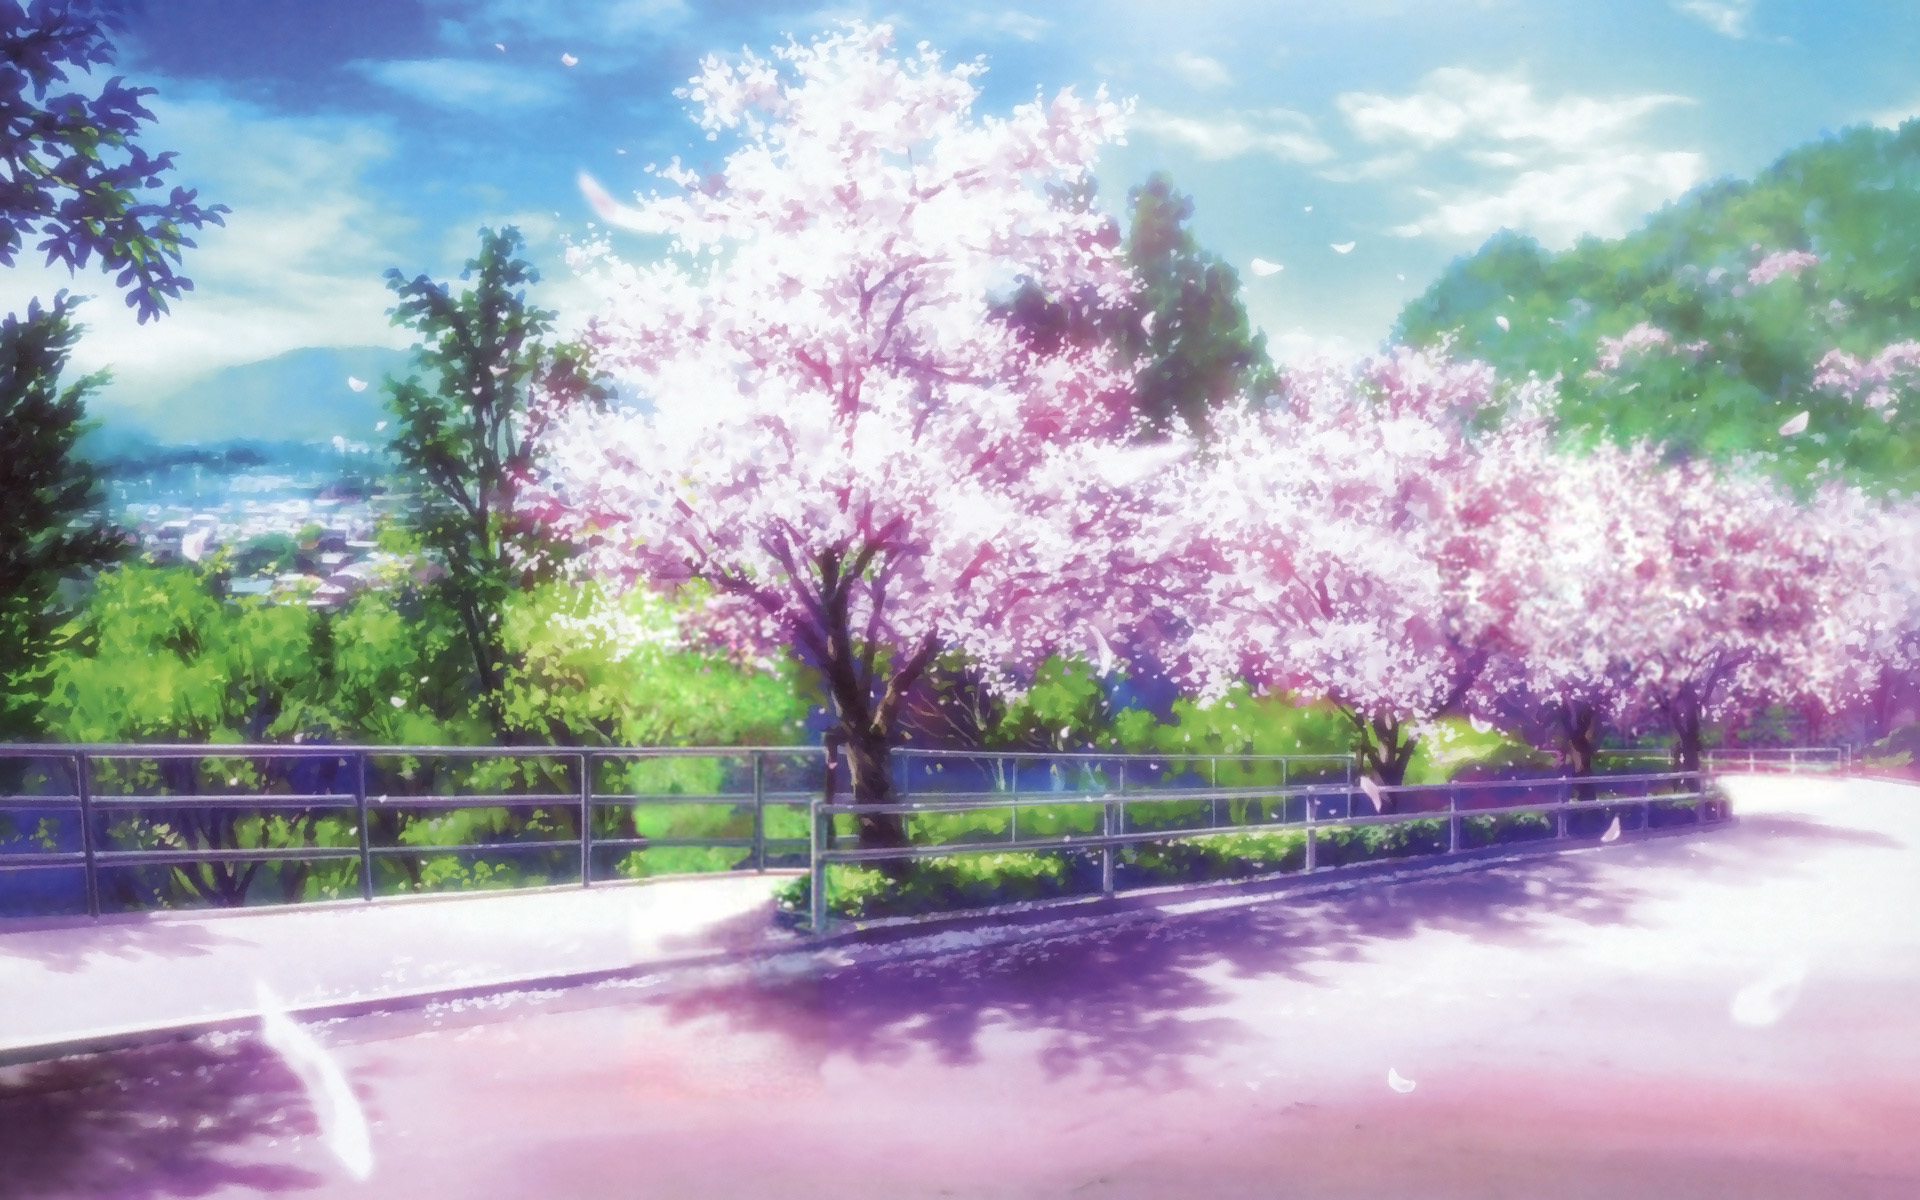 2,661 Anime Sakura Images, Stock Photos & Vectors | Shutterstock